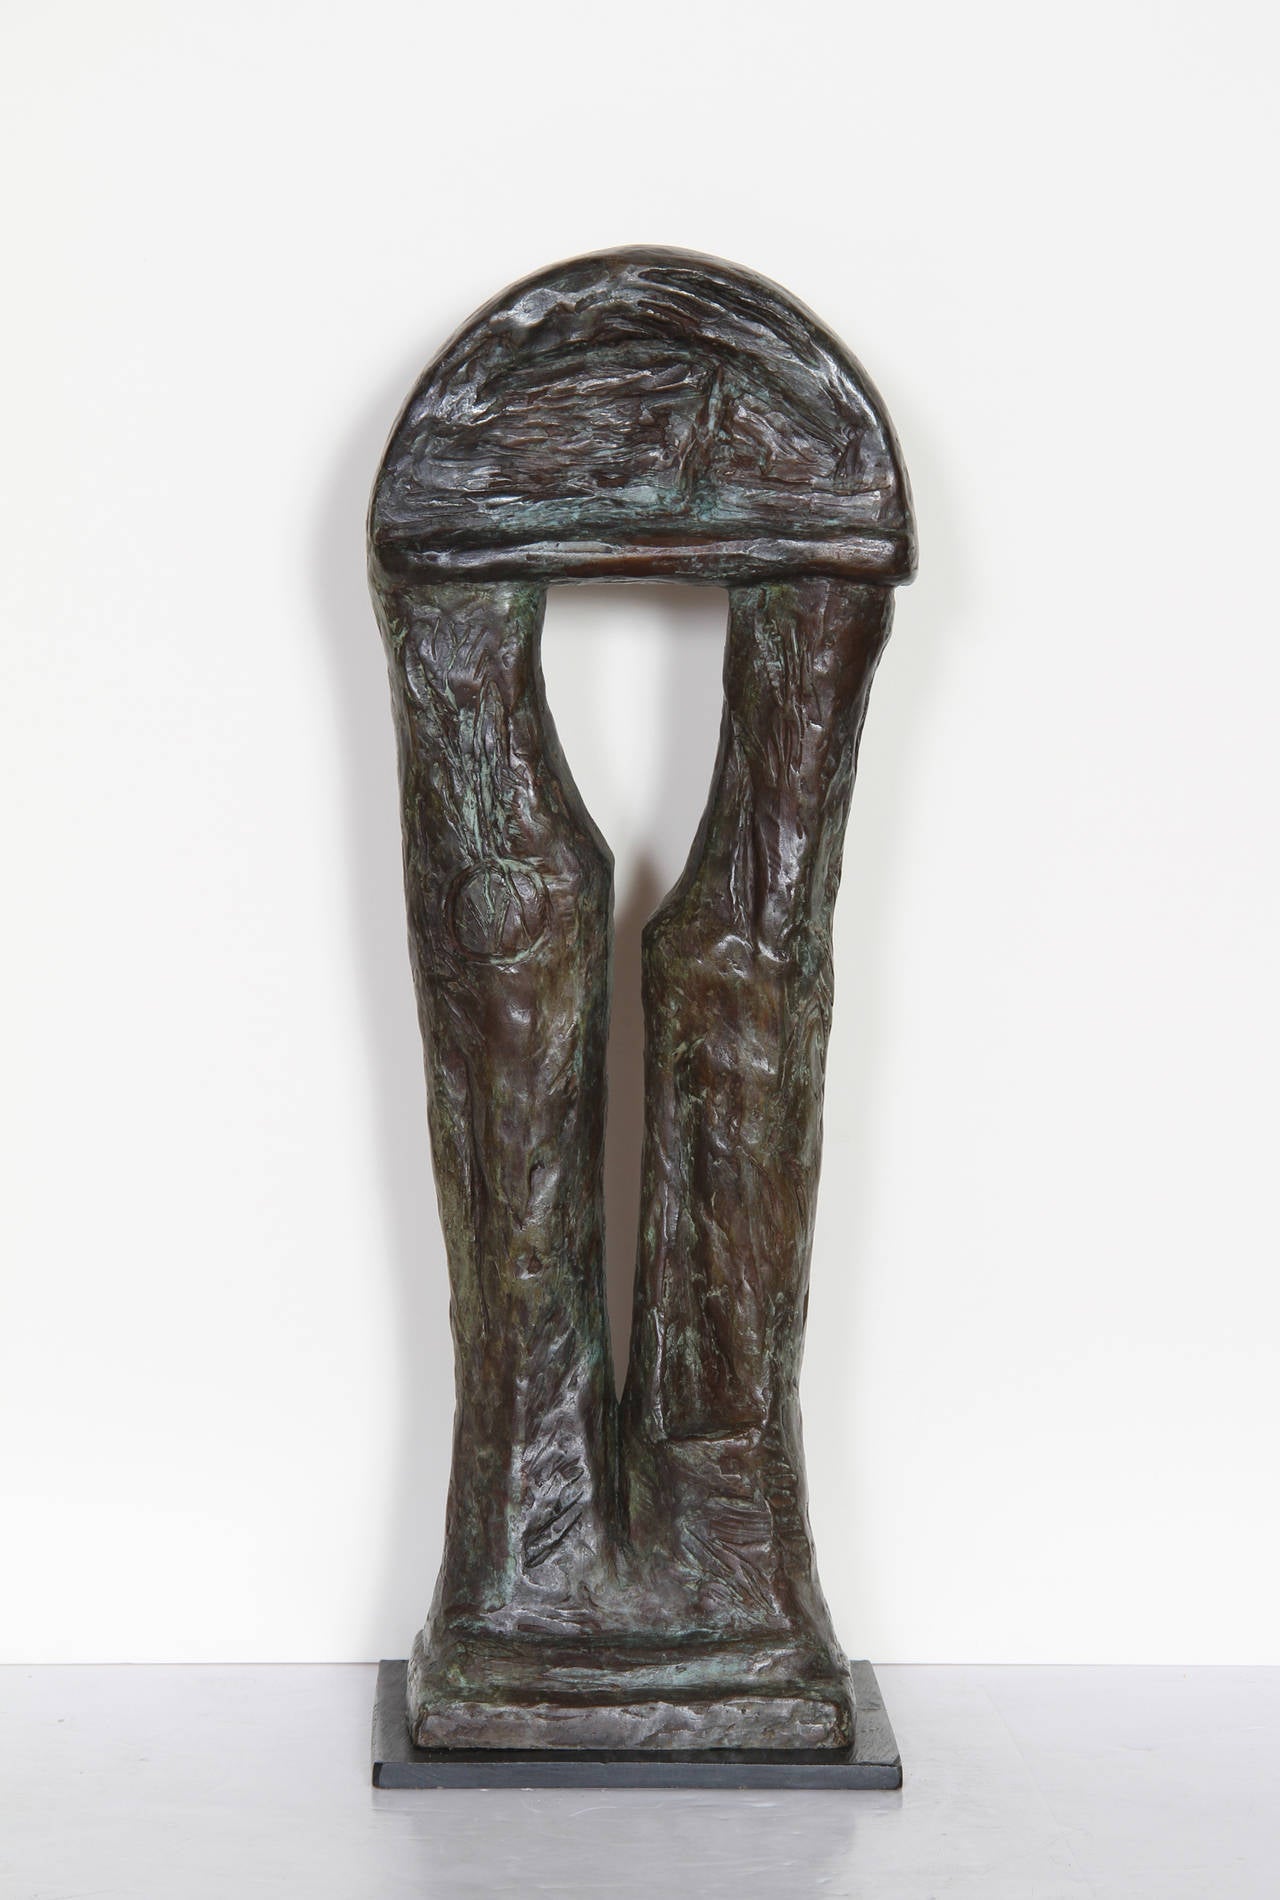 Artistics : Thom Crawford, Américain (1944 - )
Titre : Quatre signes terrestres : La lunette de l'arbre de bronze
Moyen : Sculpture en bronze, signature et numéro inscrits
Edition : 4/5
Dimensions : 50,8 cm x 16,51 cm x 10,16 cm (20 in. x 6.5 in. x